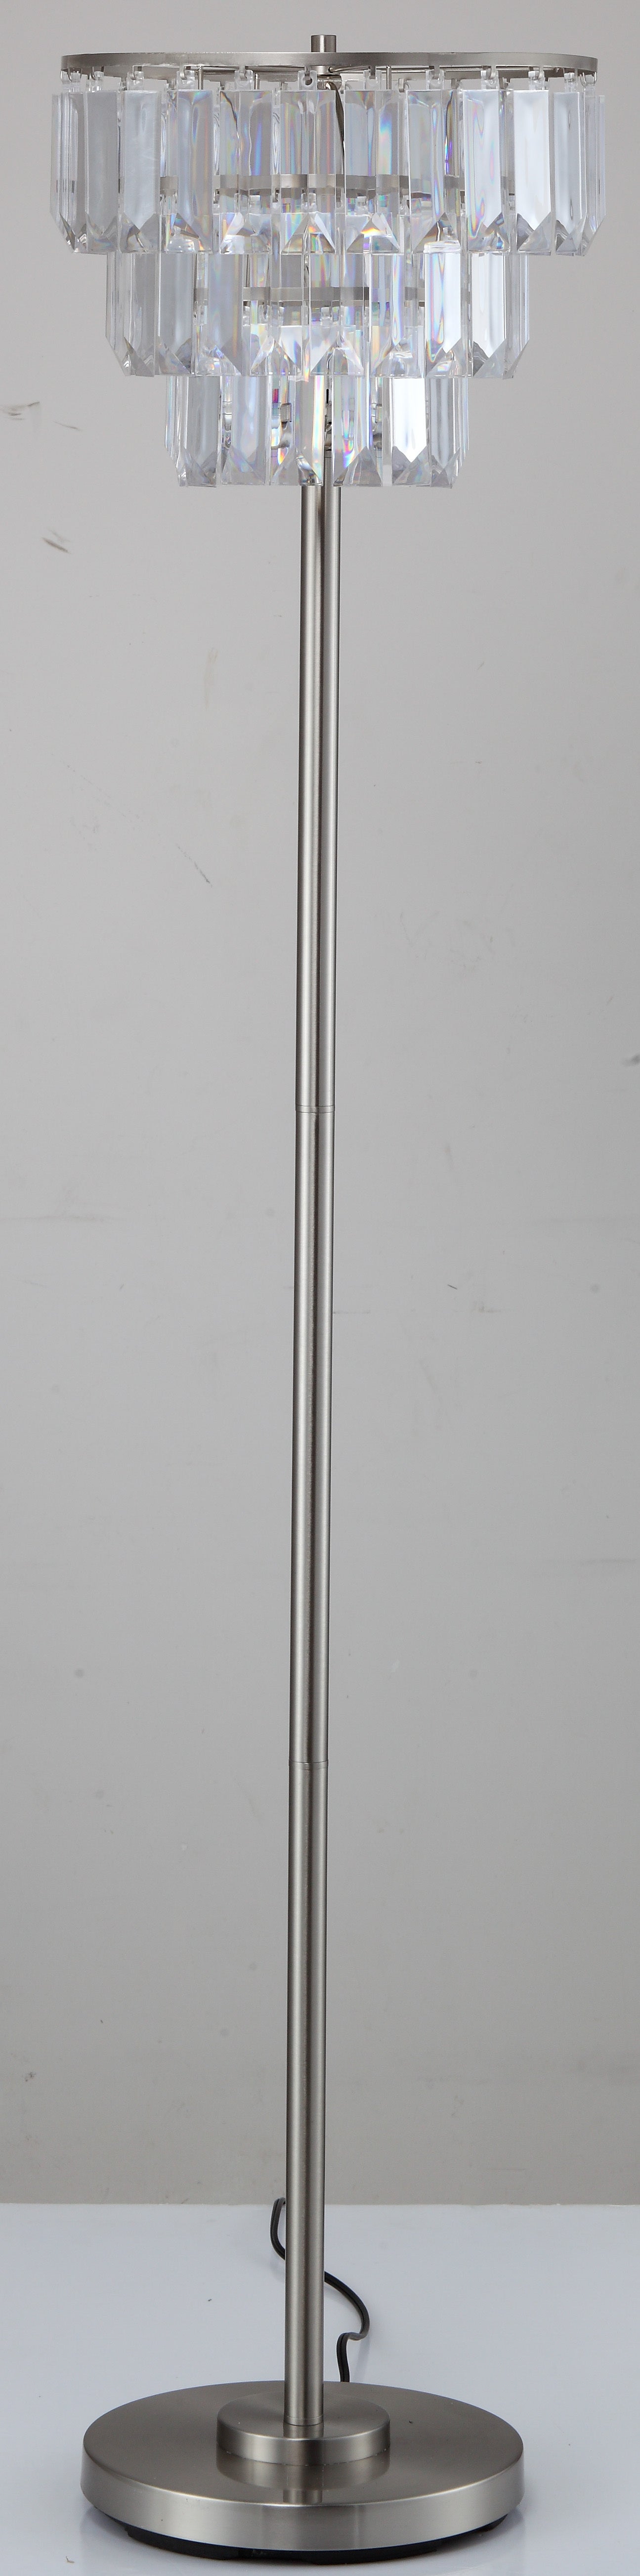 60.5"H CONTEMPORARY CRYSTAL SHADE FLOOR LAMP 1PC CTN brushed nickel-metal